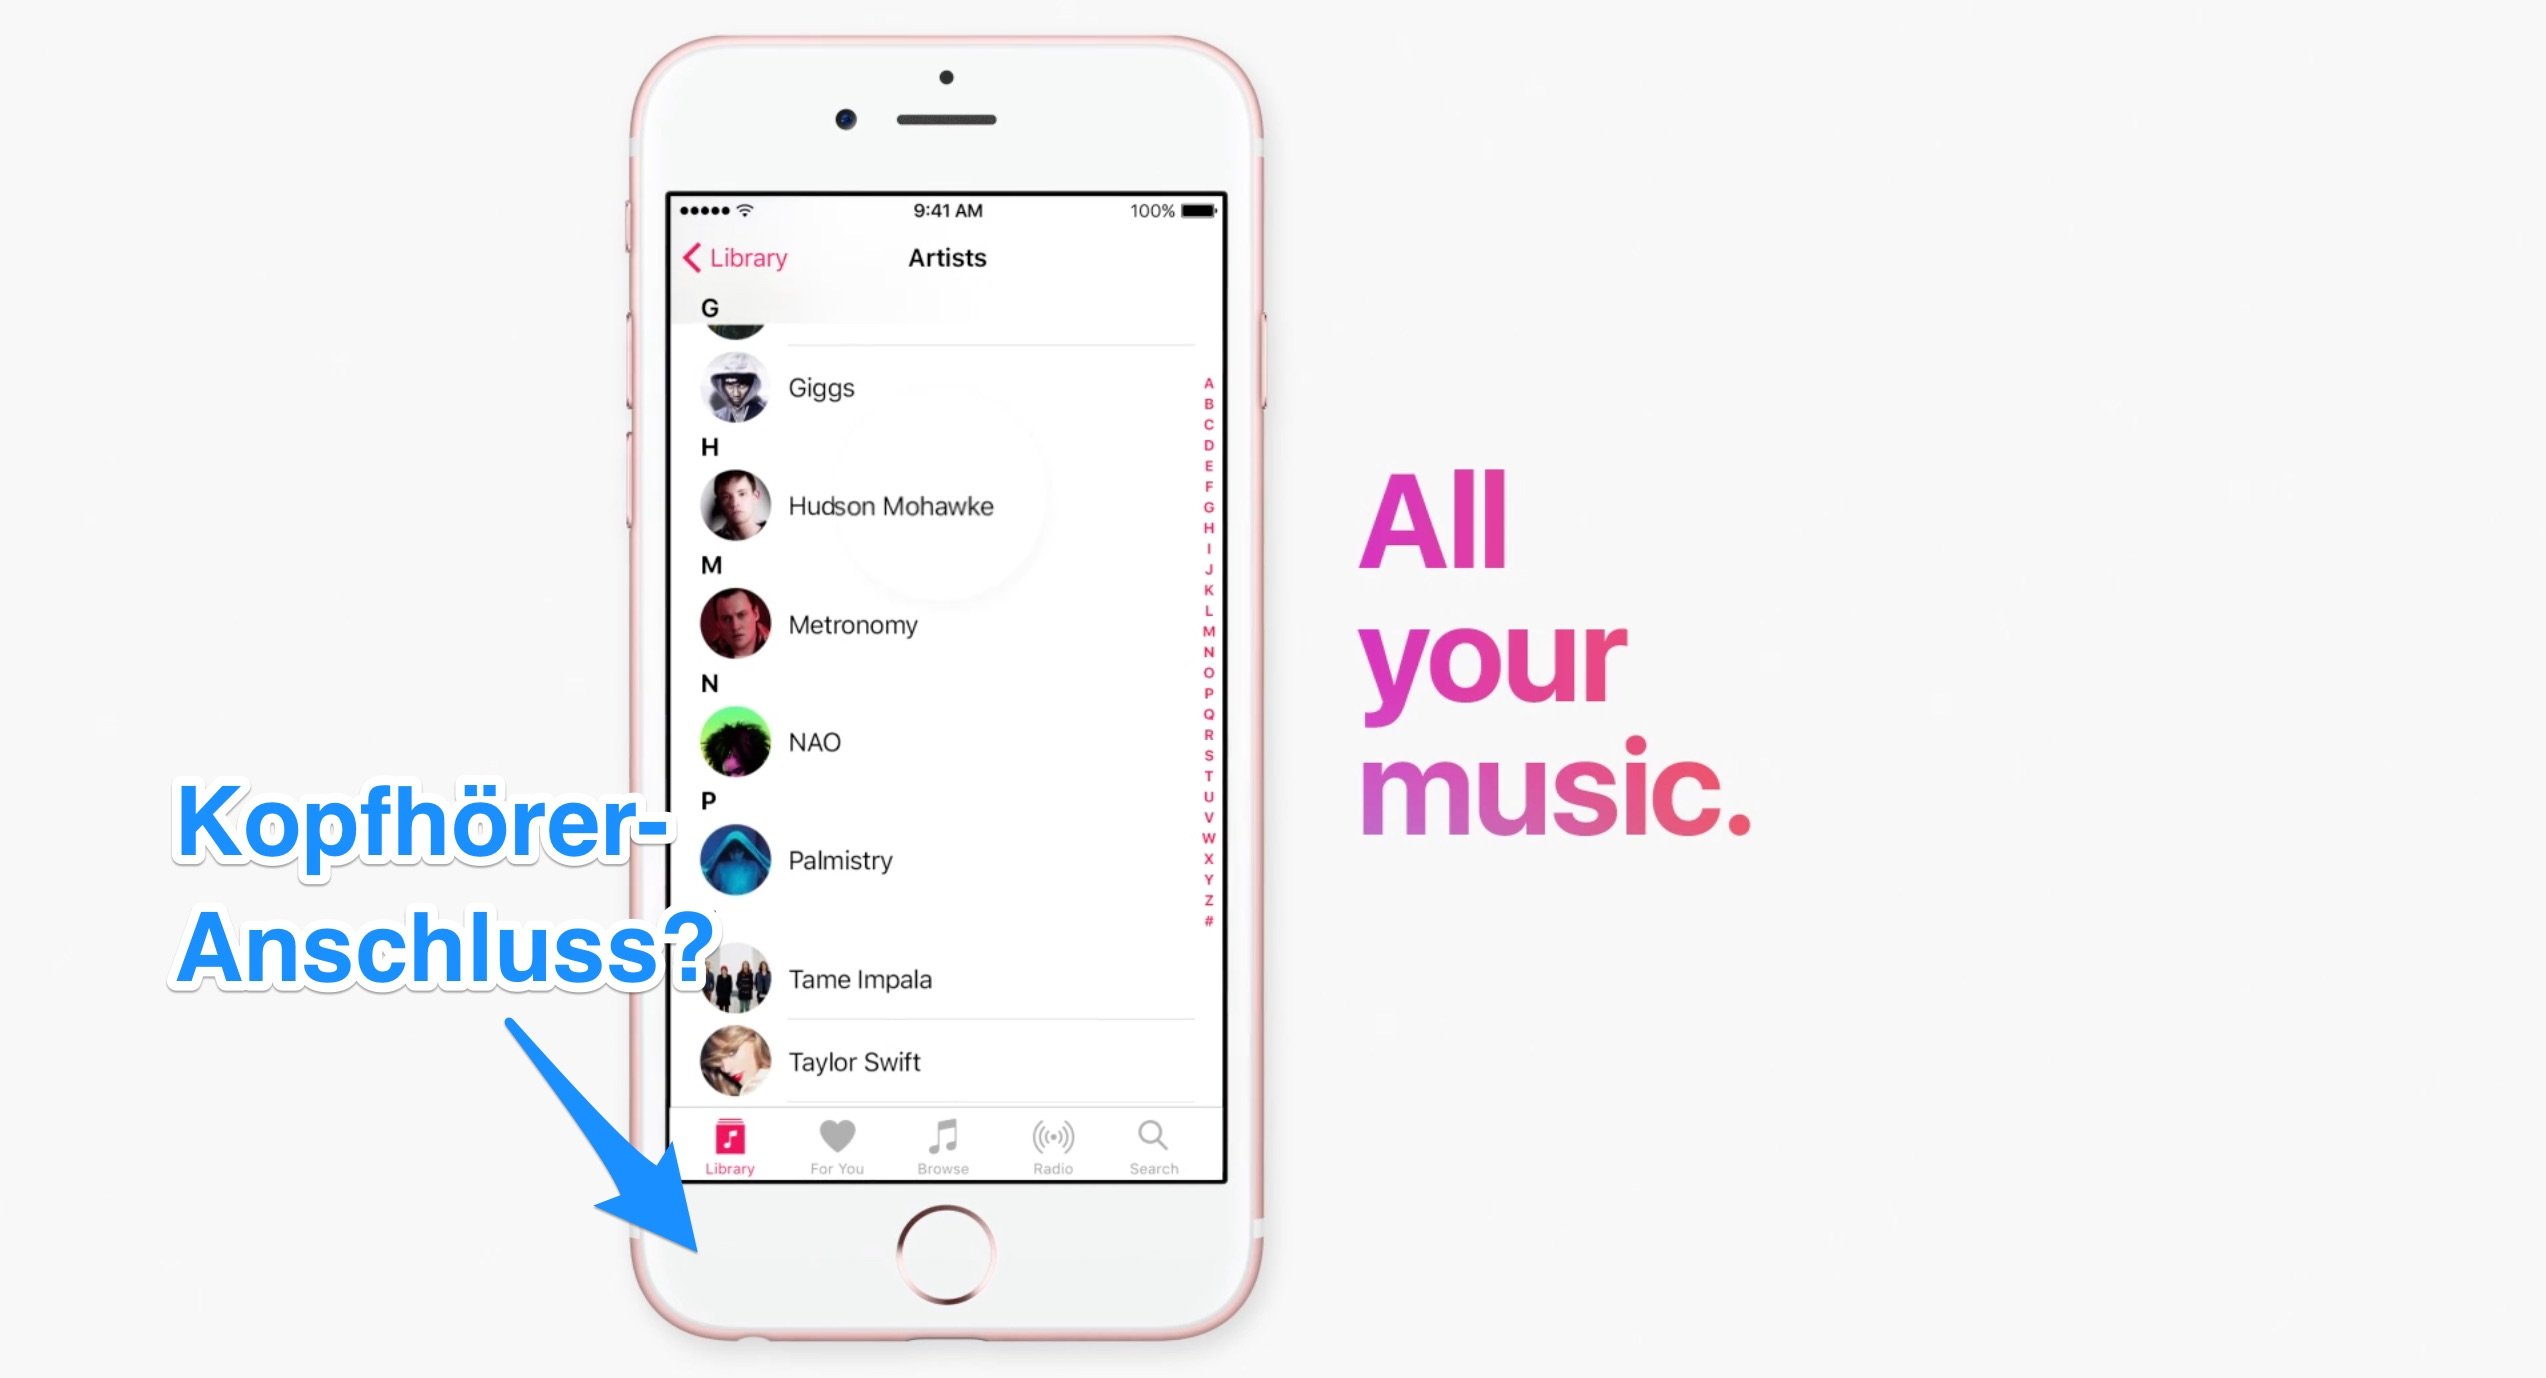 Neuer Apple Music Werbeclip featured iPhone 6s statt iPhone 7? 4